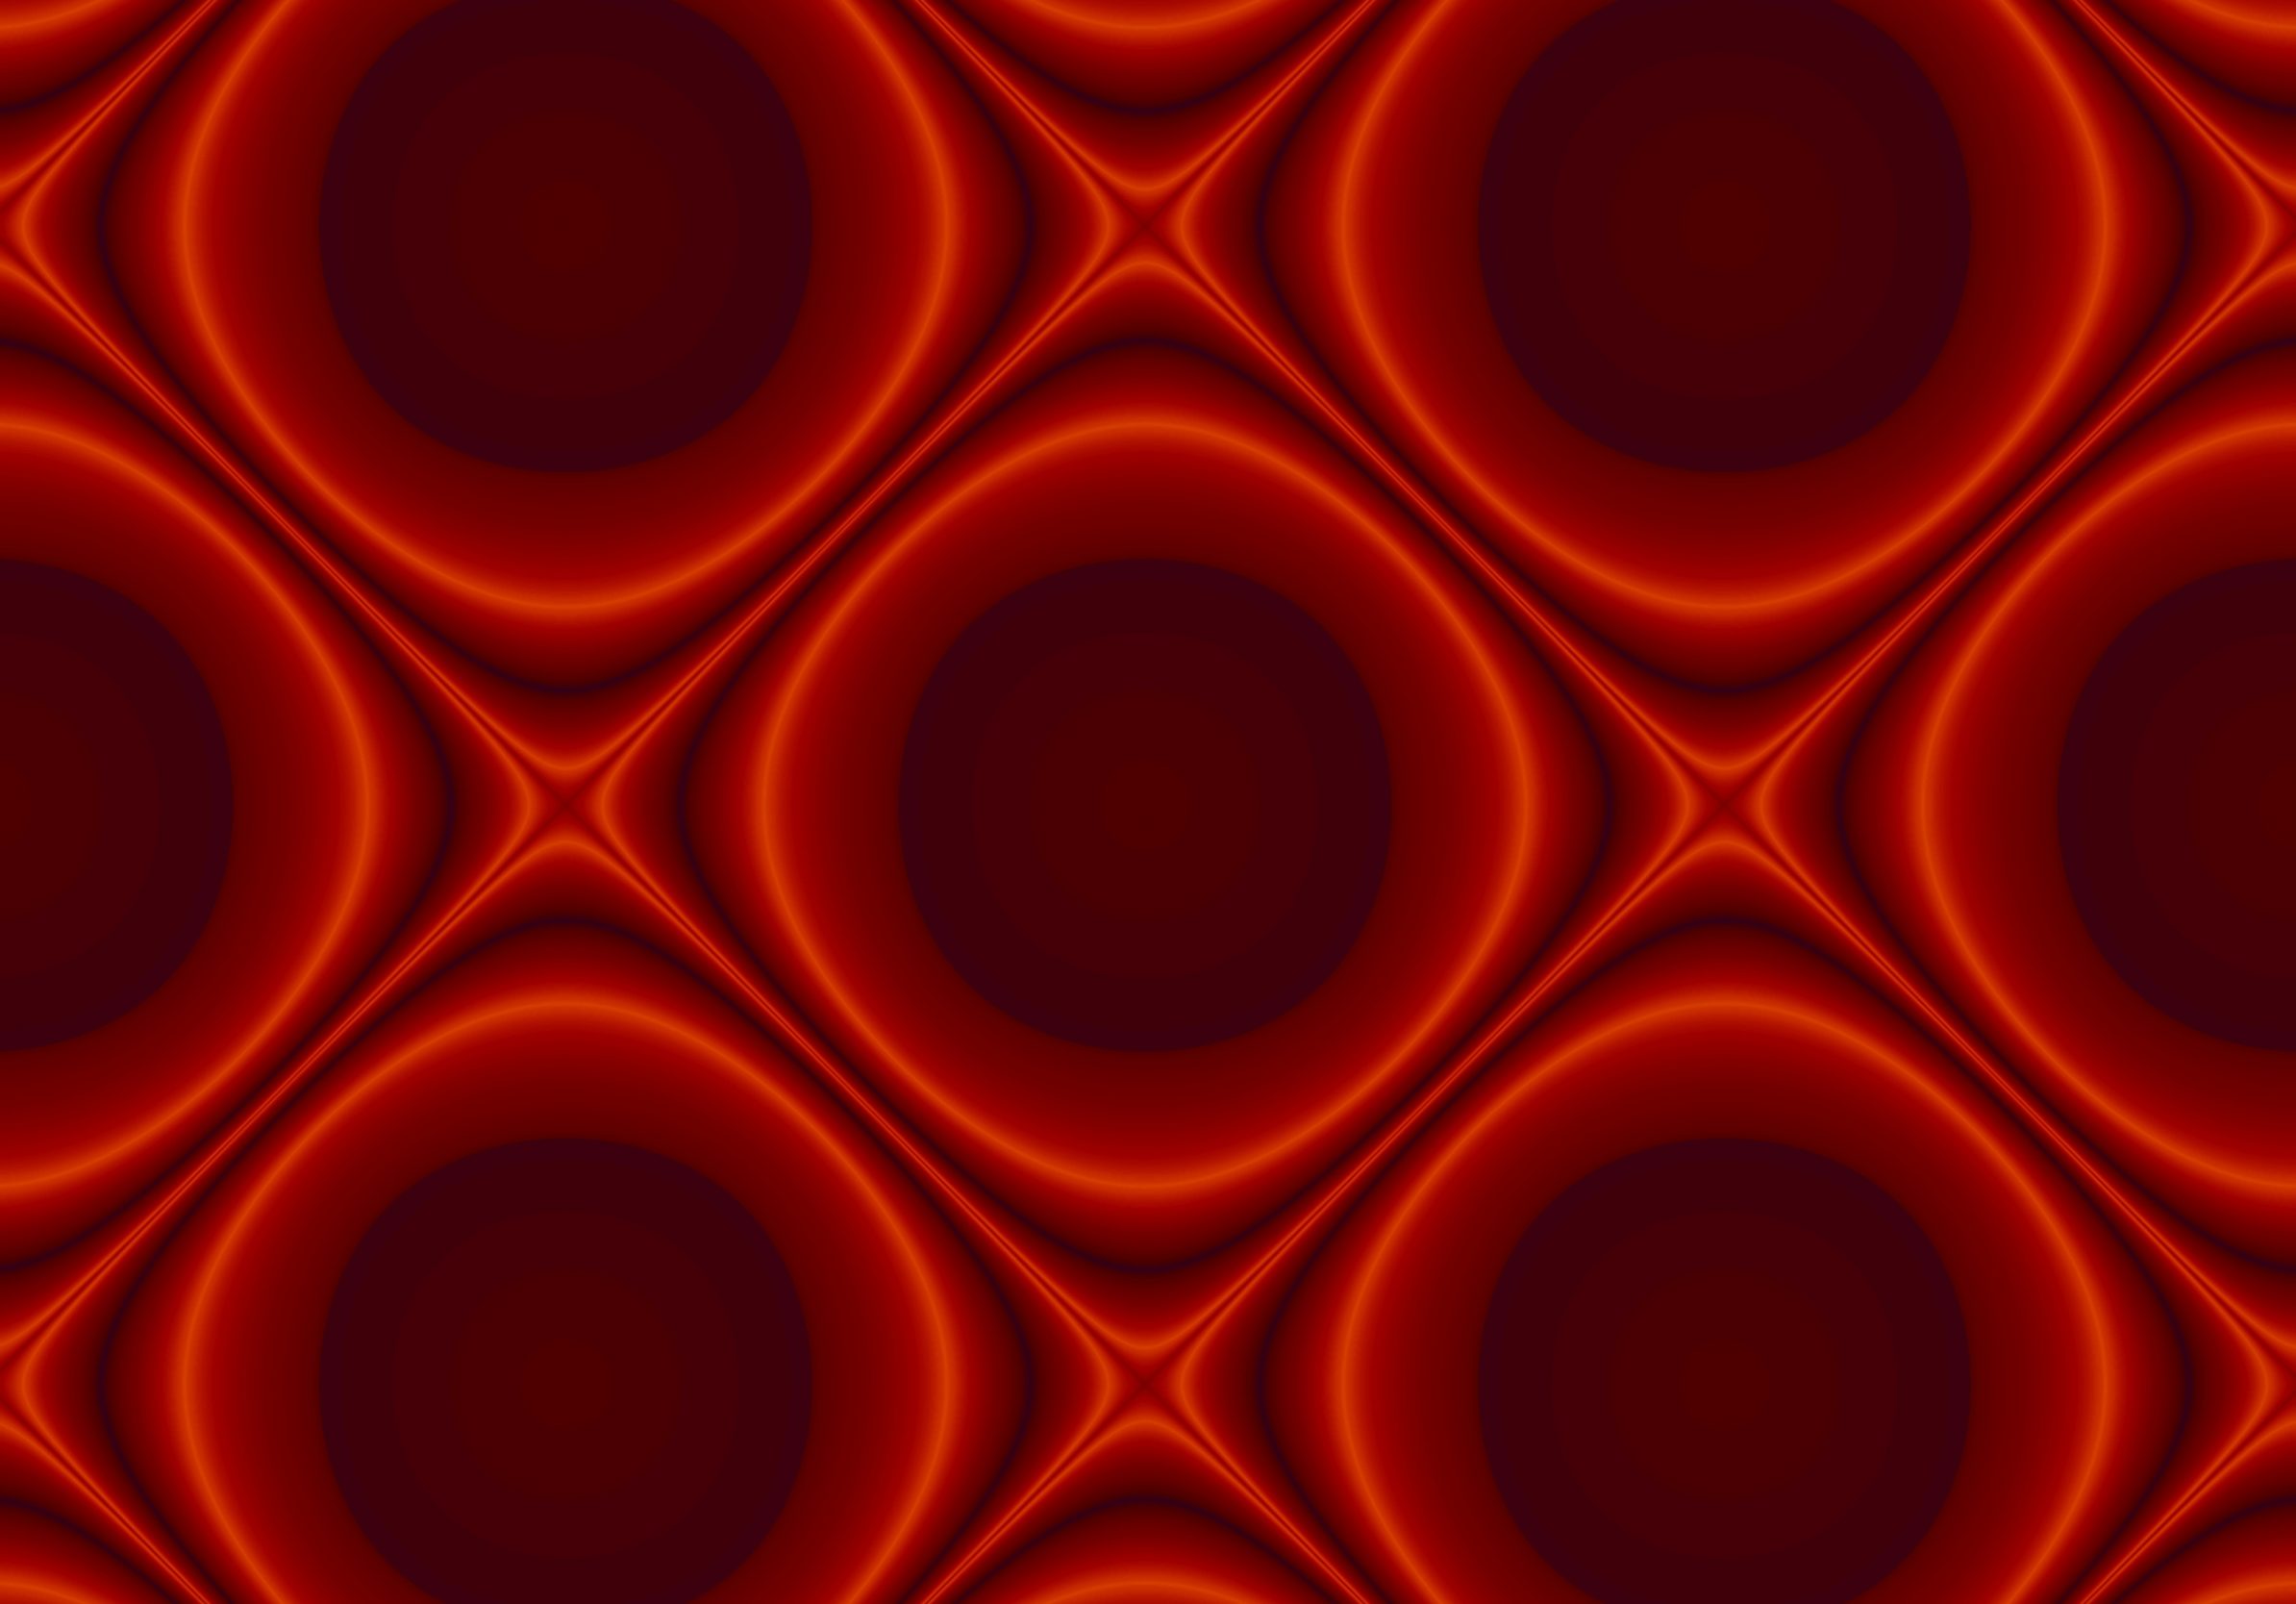 2388x1668 iPad Pro wallpapers Abstract Pattern Design Red Ipad Wallpaper 2388x1668 pixels resolution